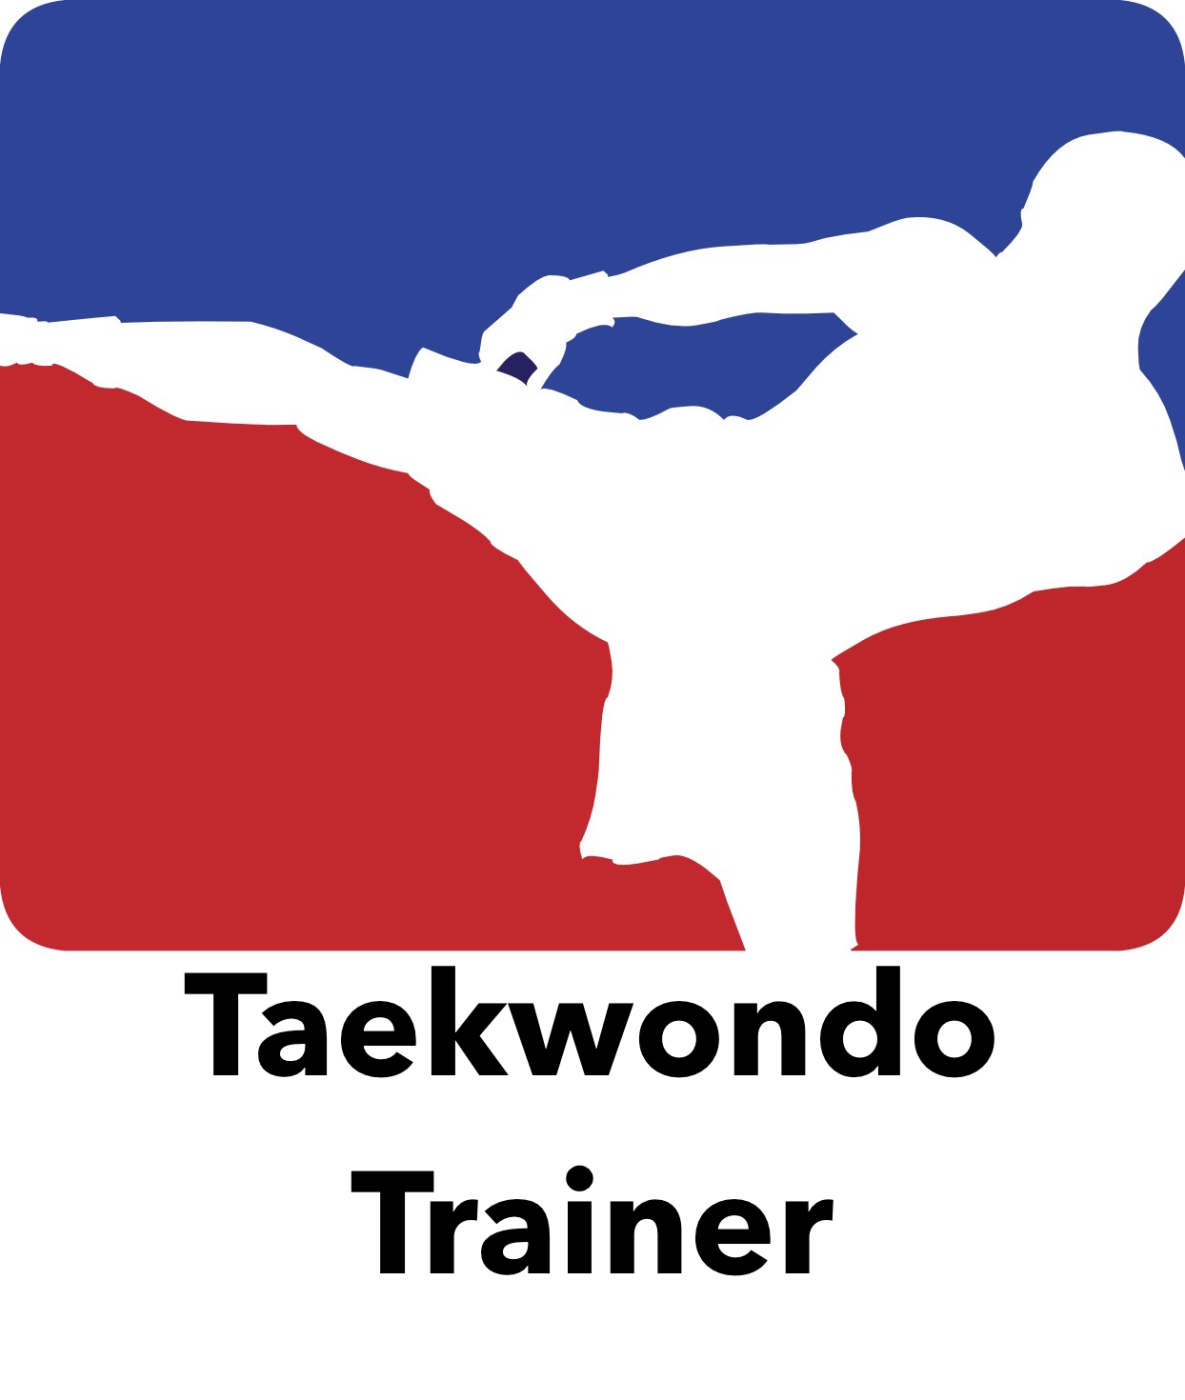 Taekwondo Trainer